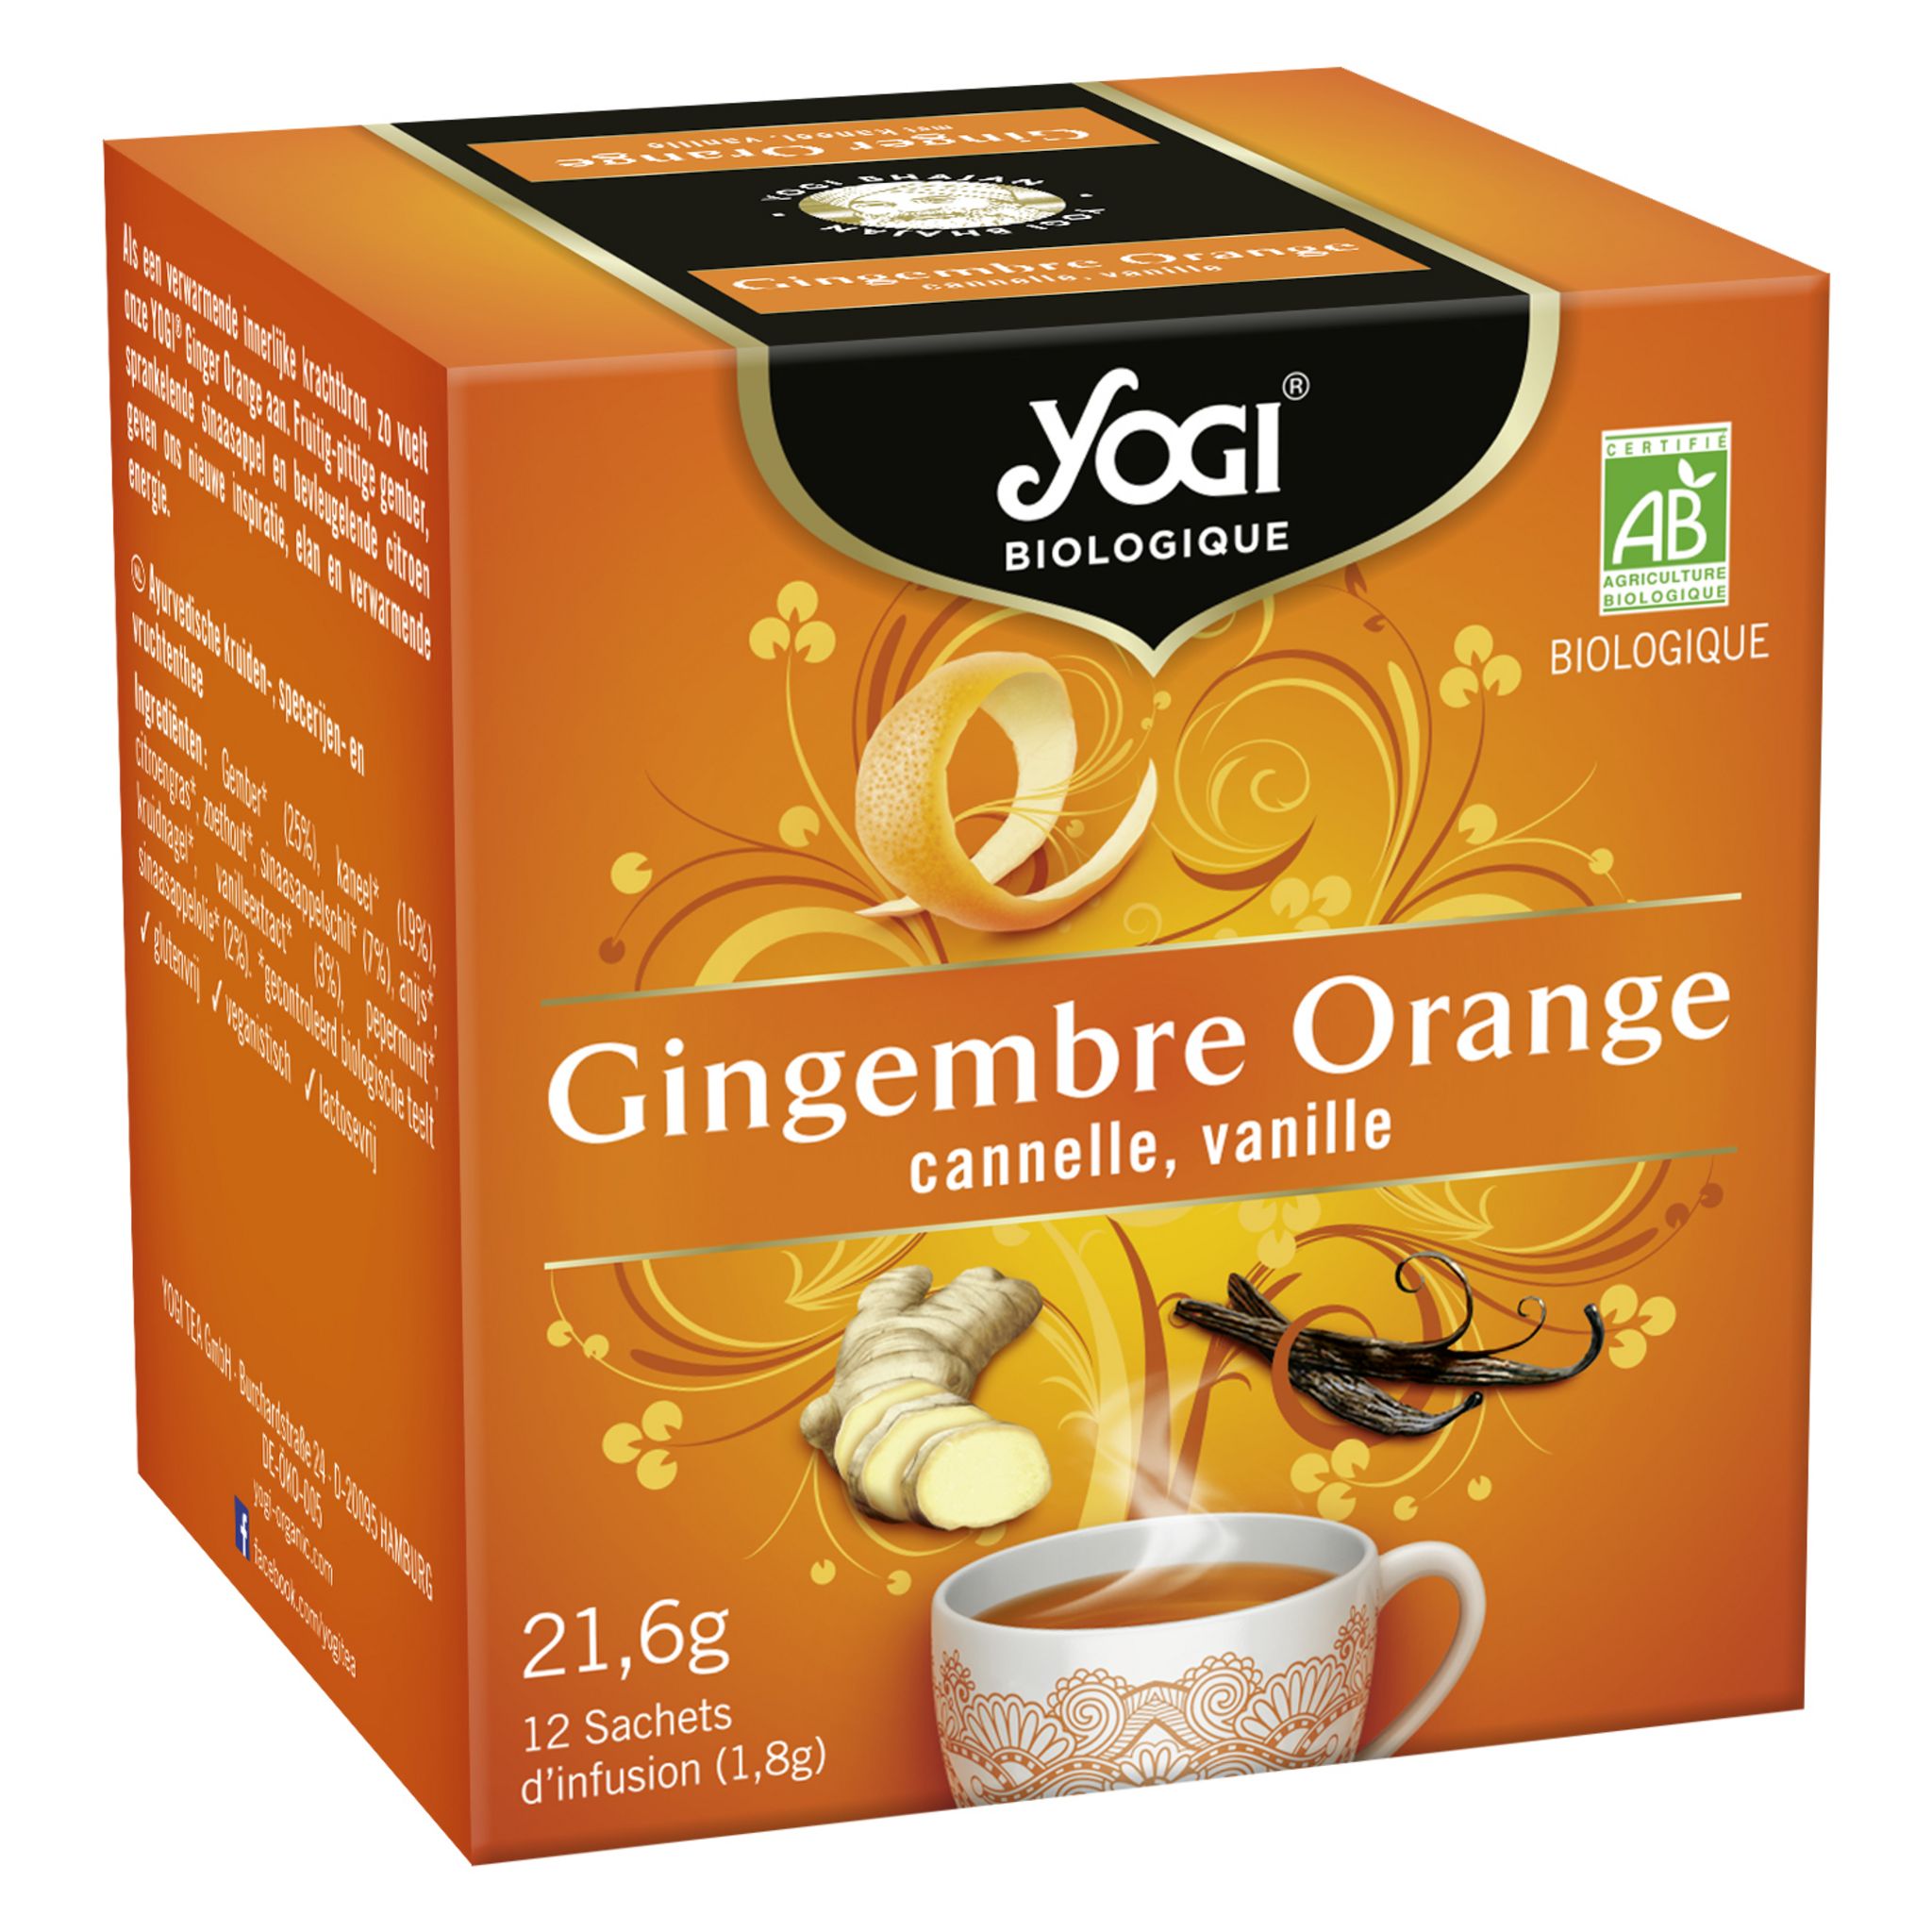 YOGI Infusion bio gingembre orange cannelle vanille 12 sachets 21,6g pas  cher 